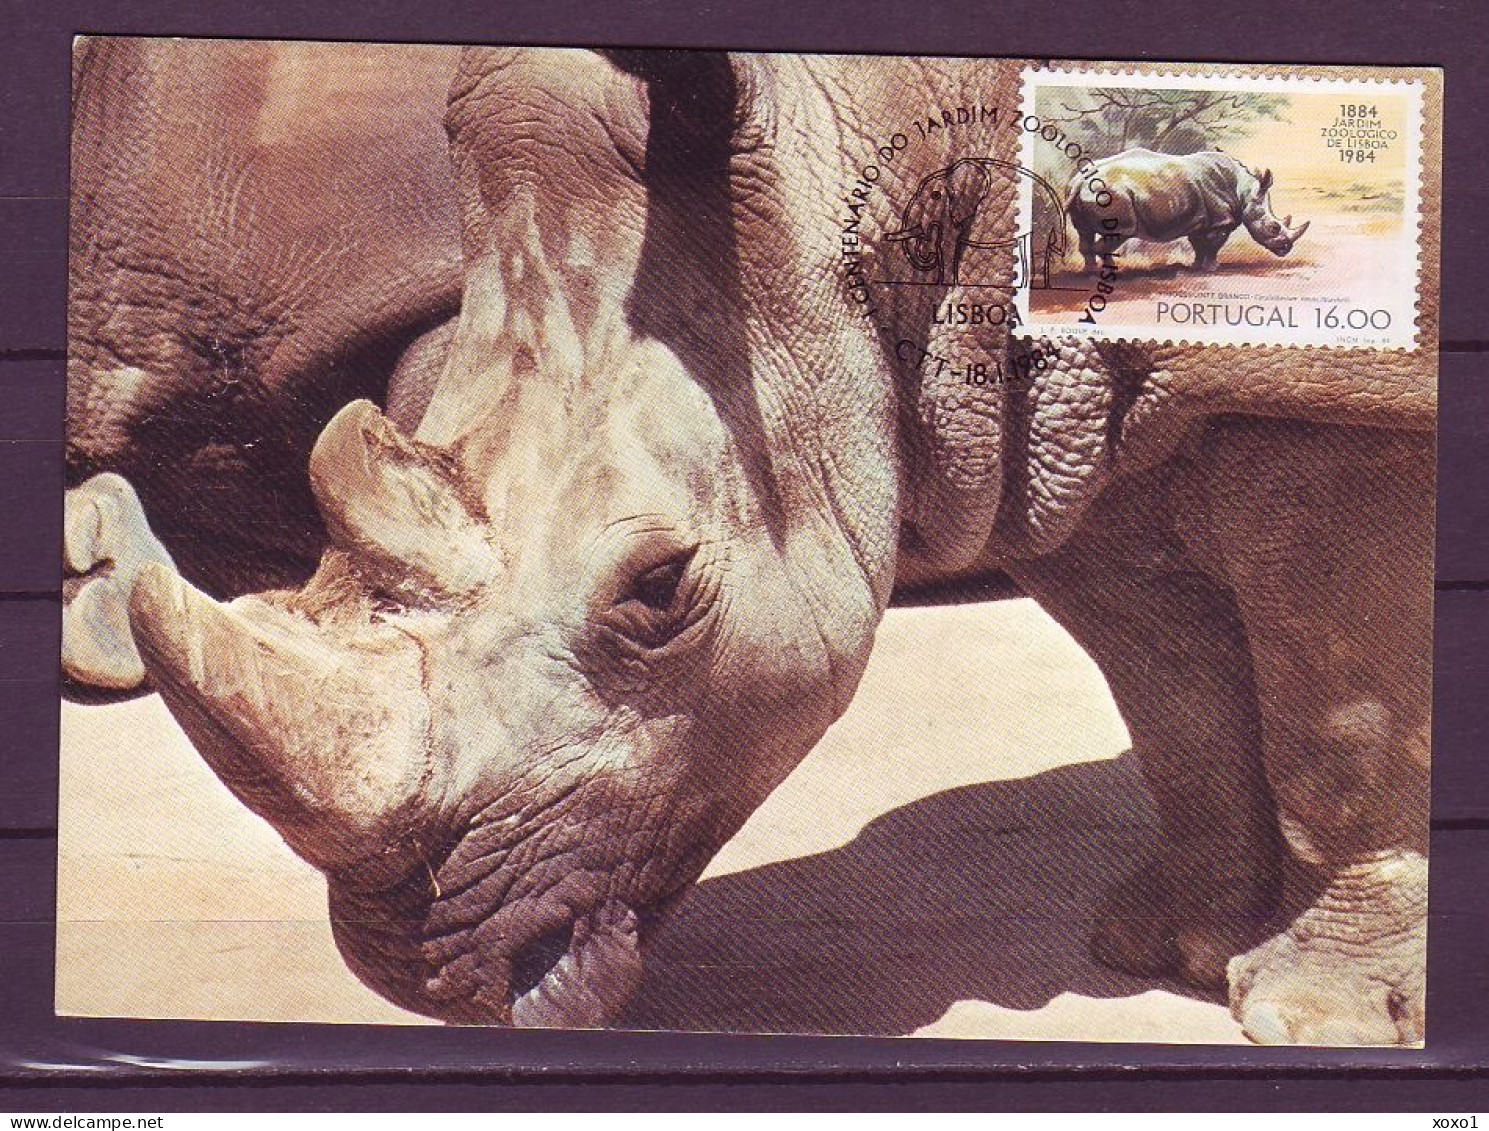 Portugal 1984 MiNr. 1620 100 Jahre Zoo Von Lissabon The White Rhinoceros (Ceratotherium Simum)  MC 2,50 € - Rhinoceros